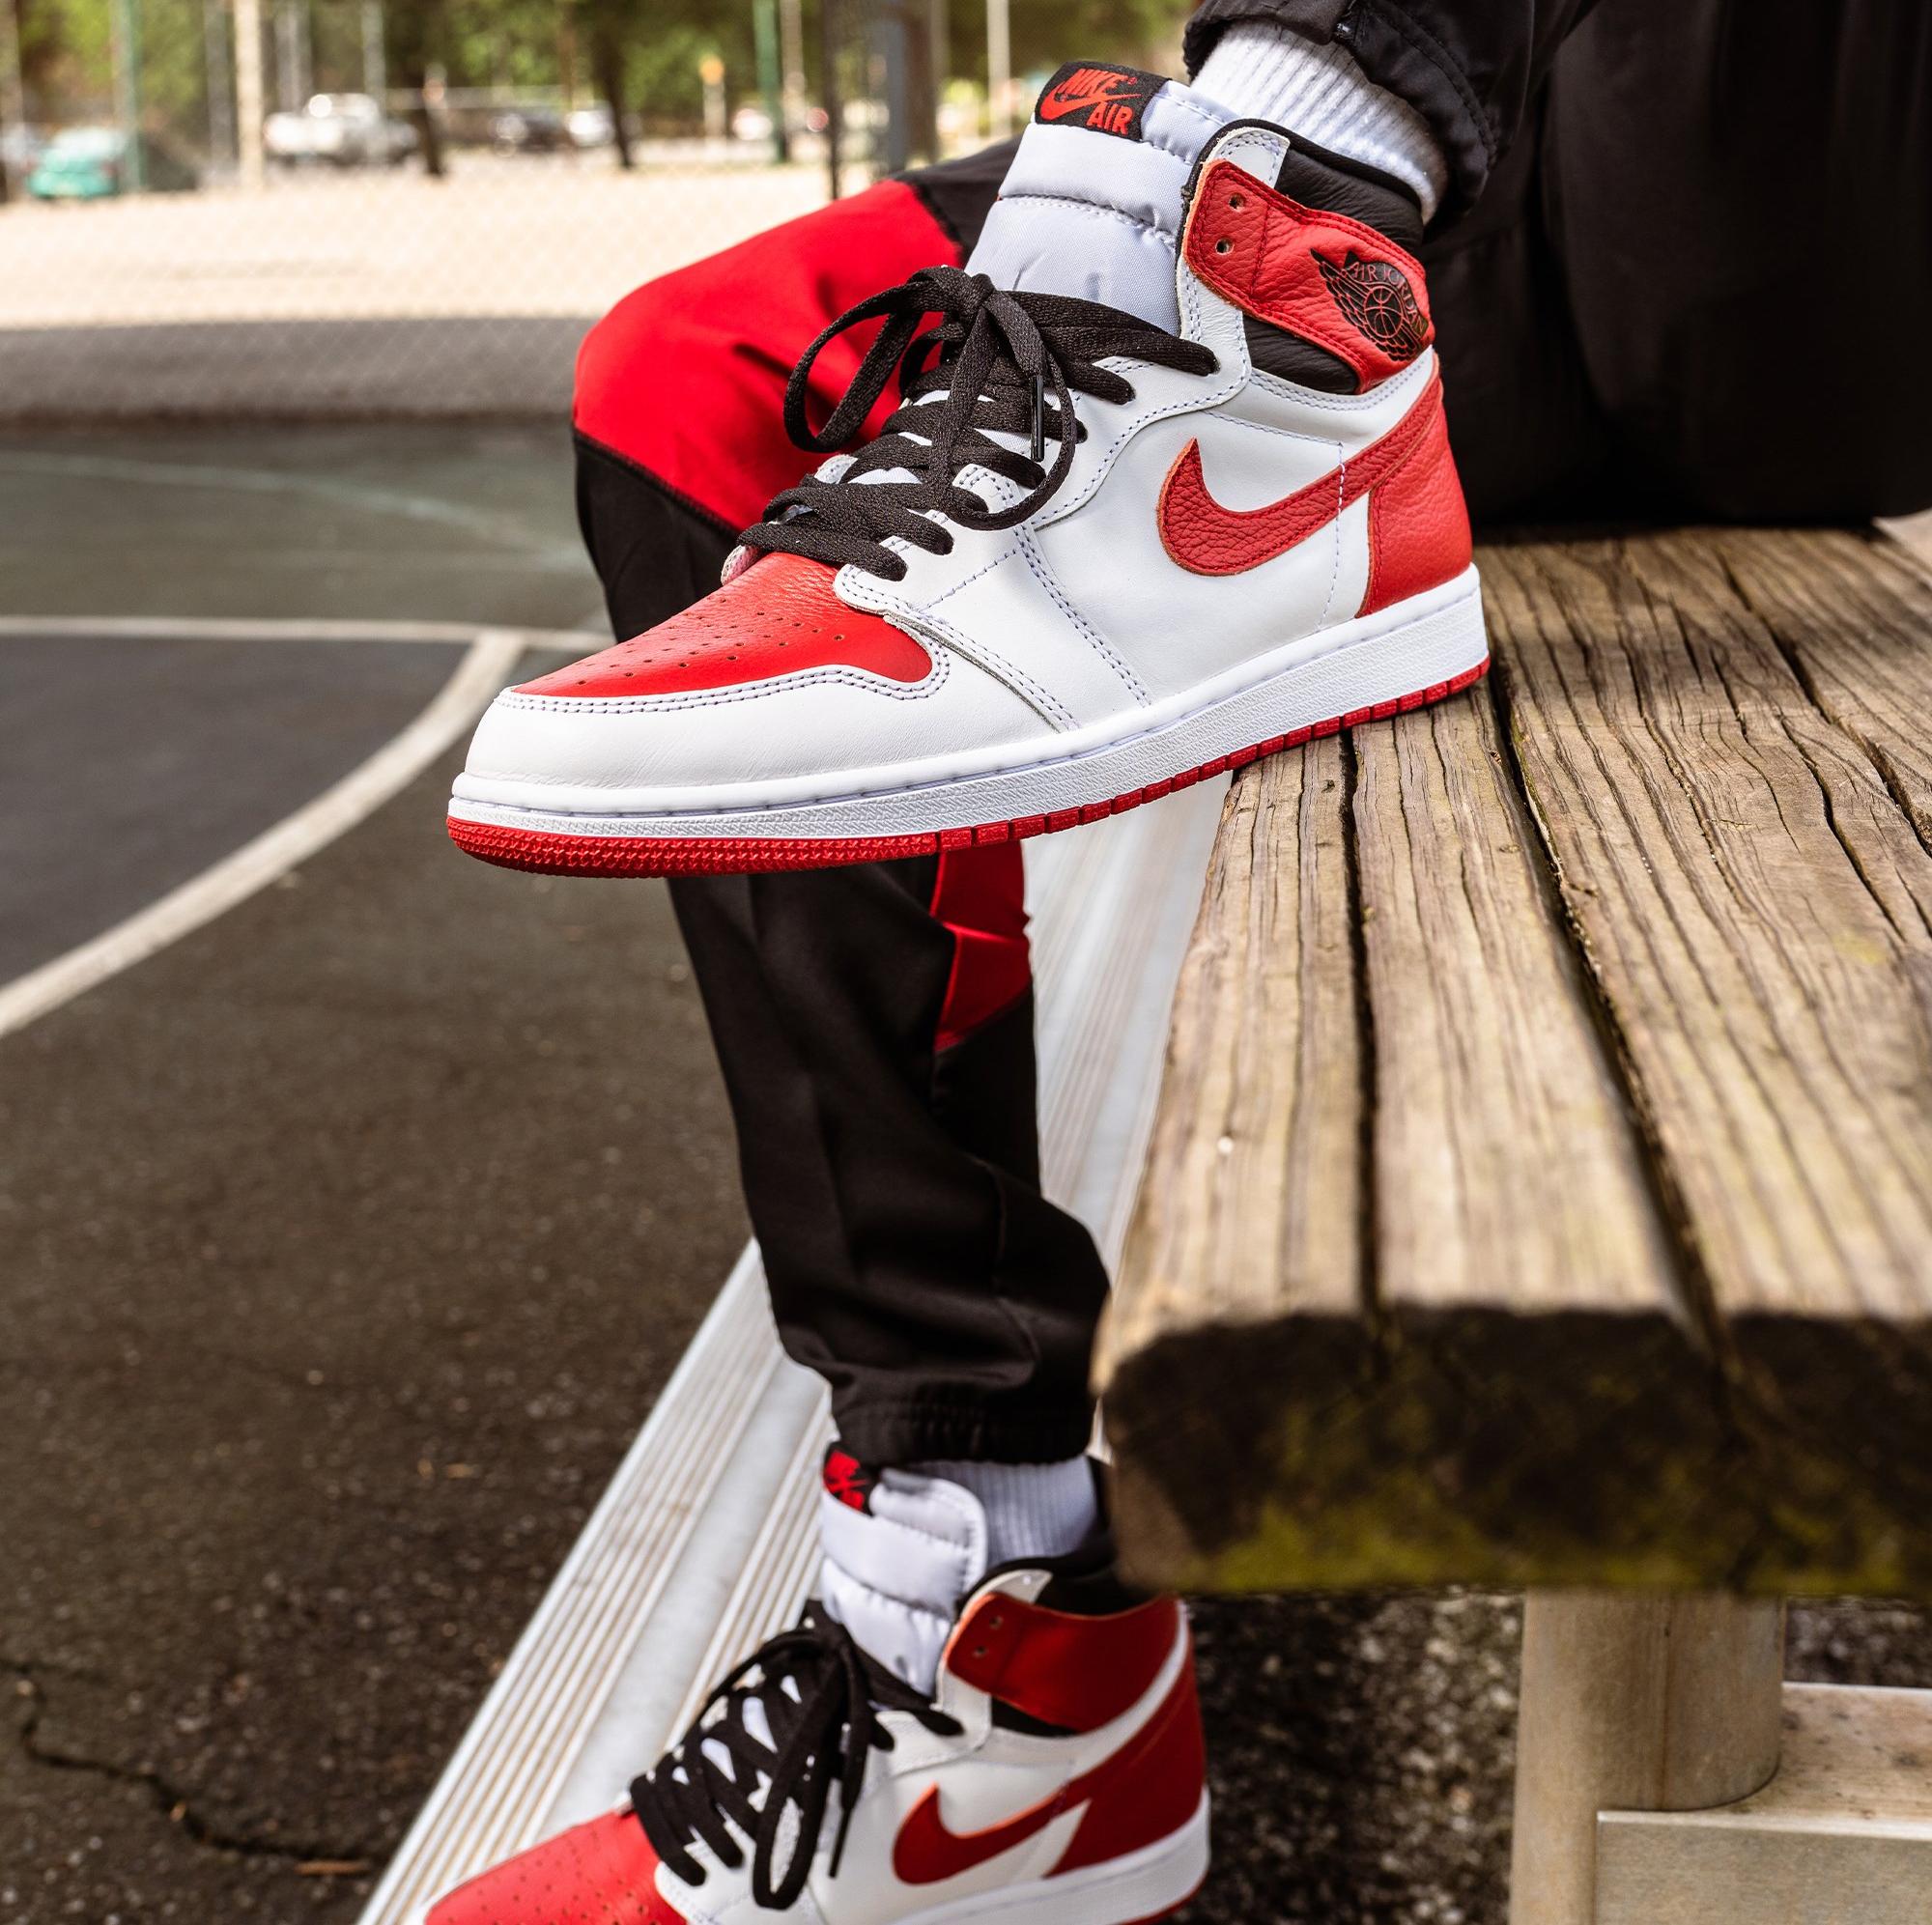 Sneakers Release – Jordan 1 Retro High OG “Heritage&